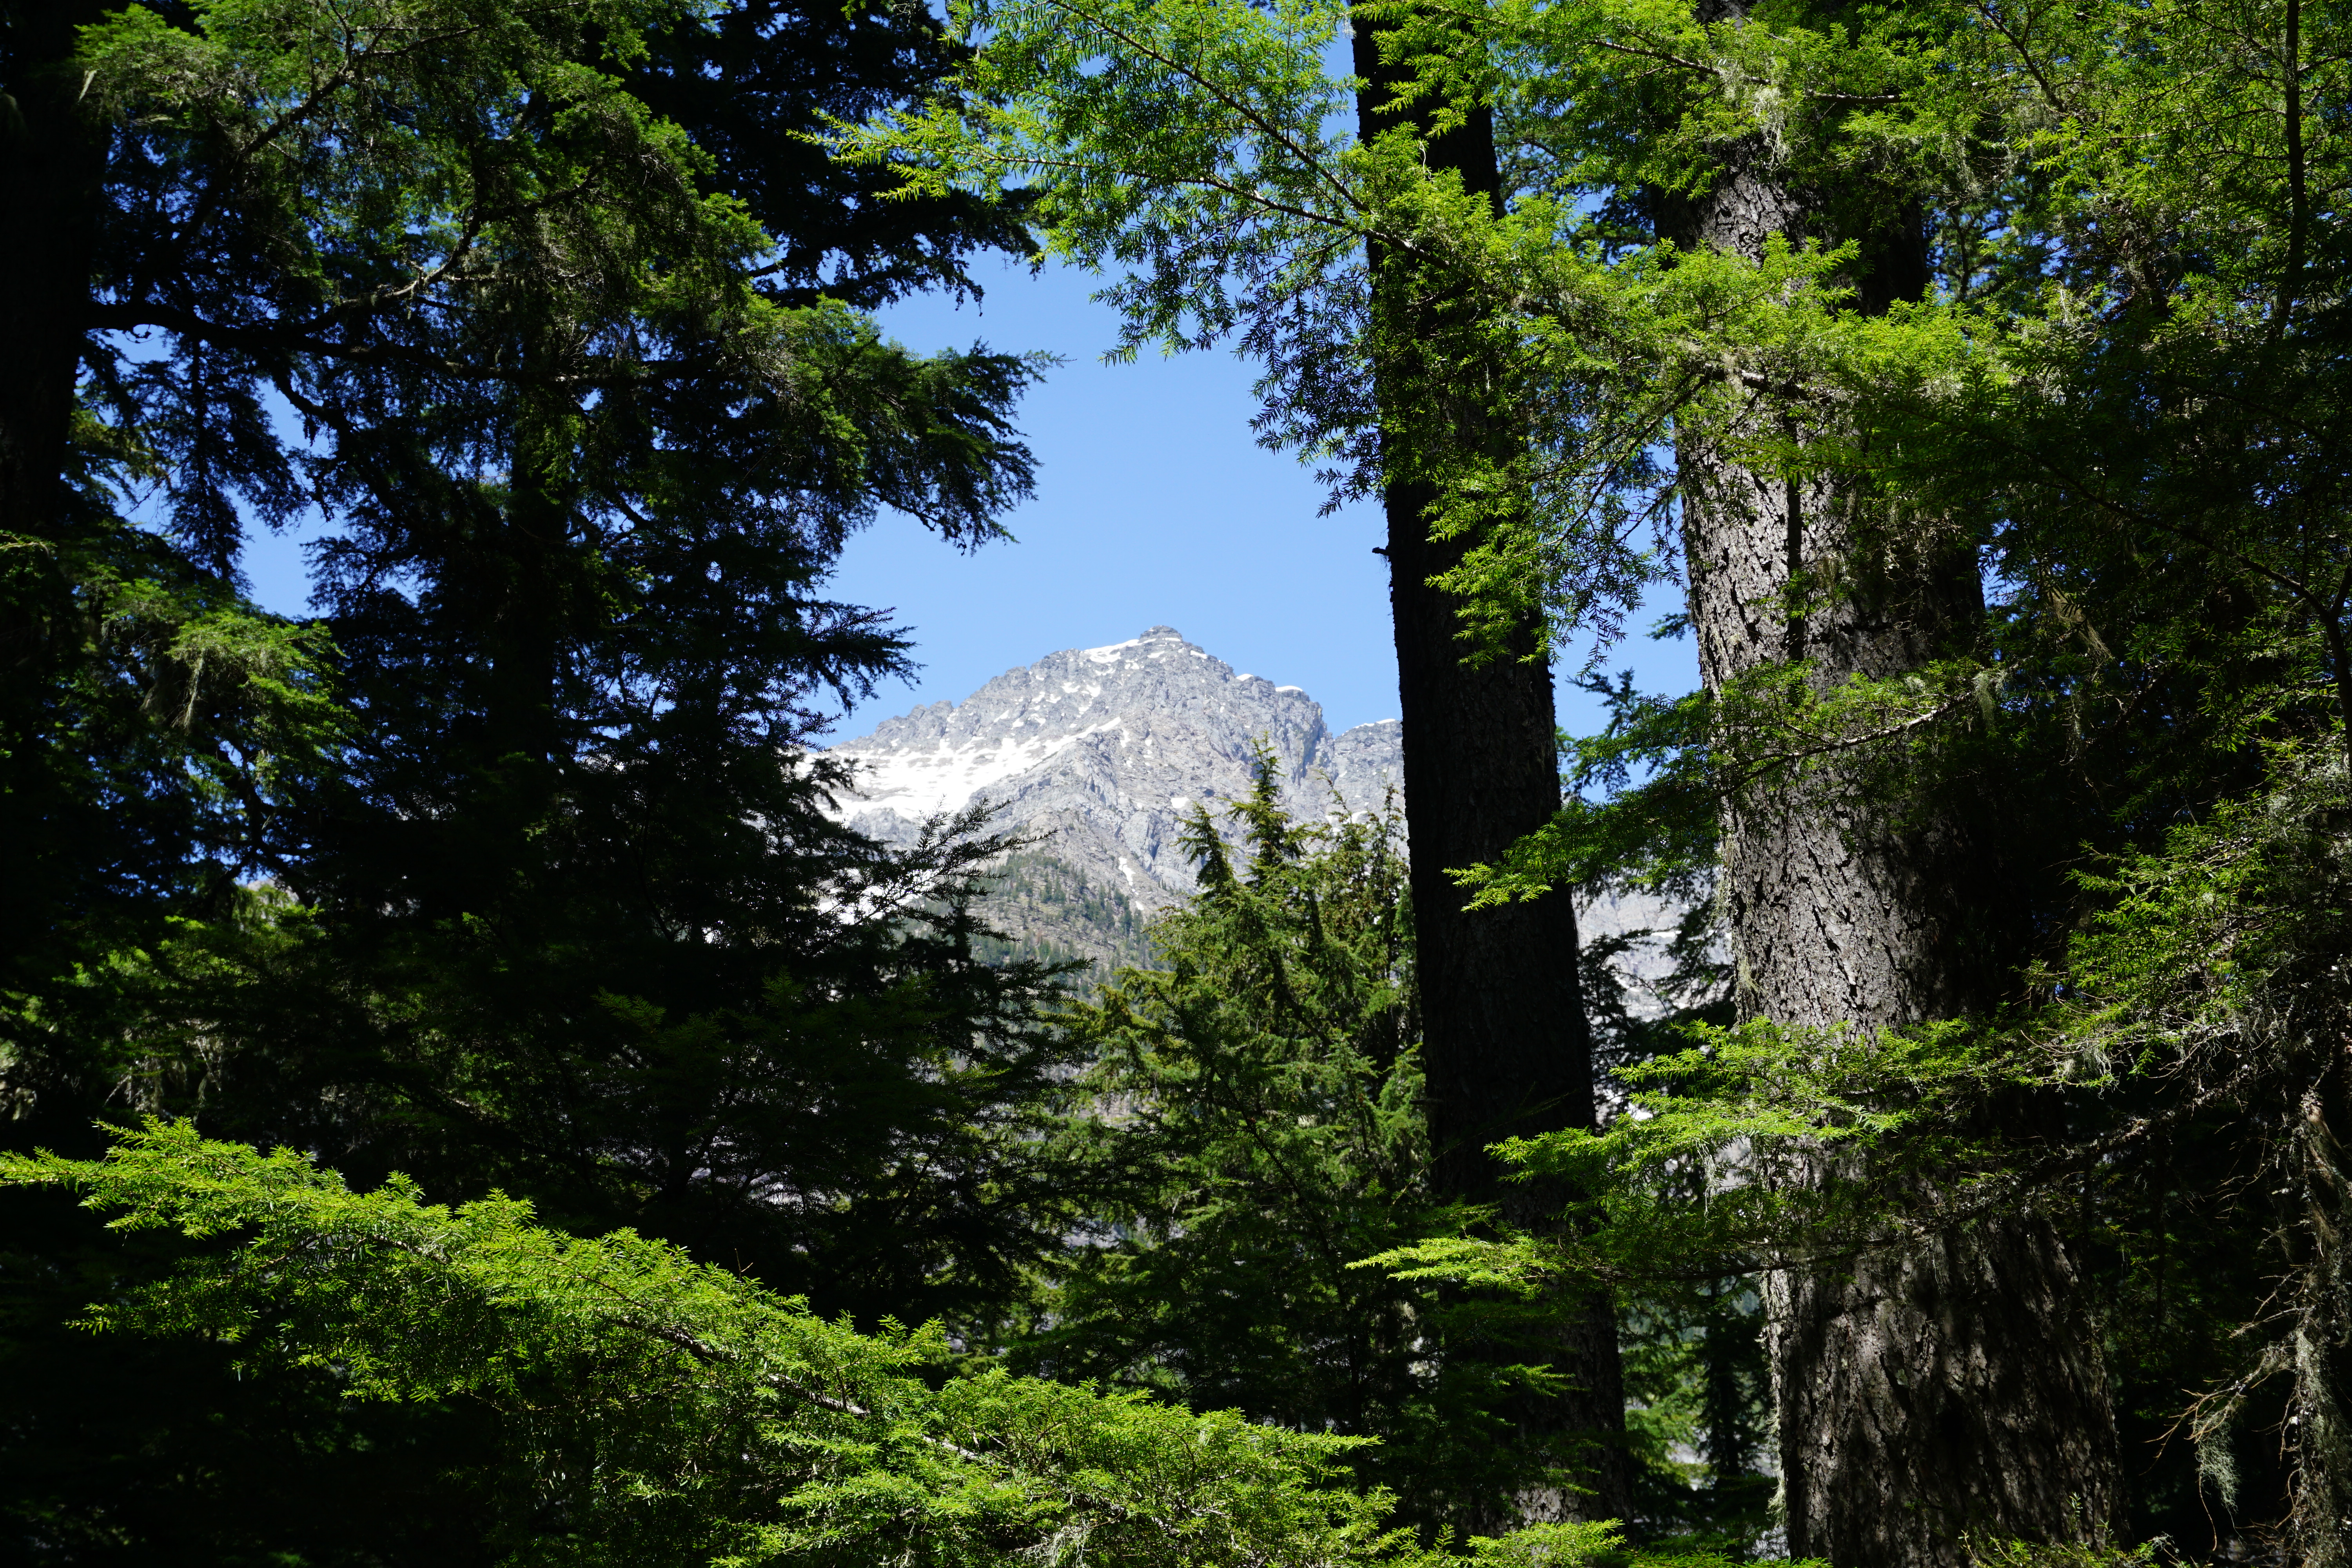 Avalanche trail mountain pic through trees